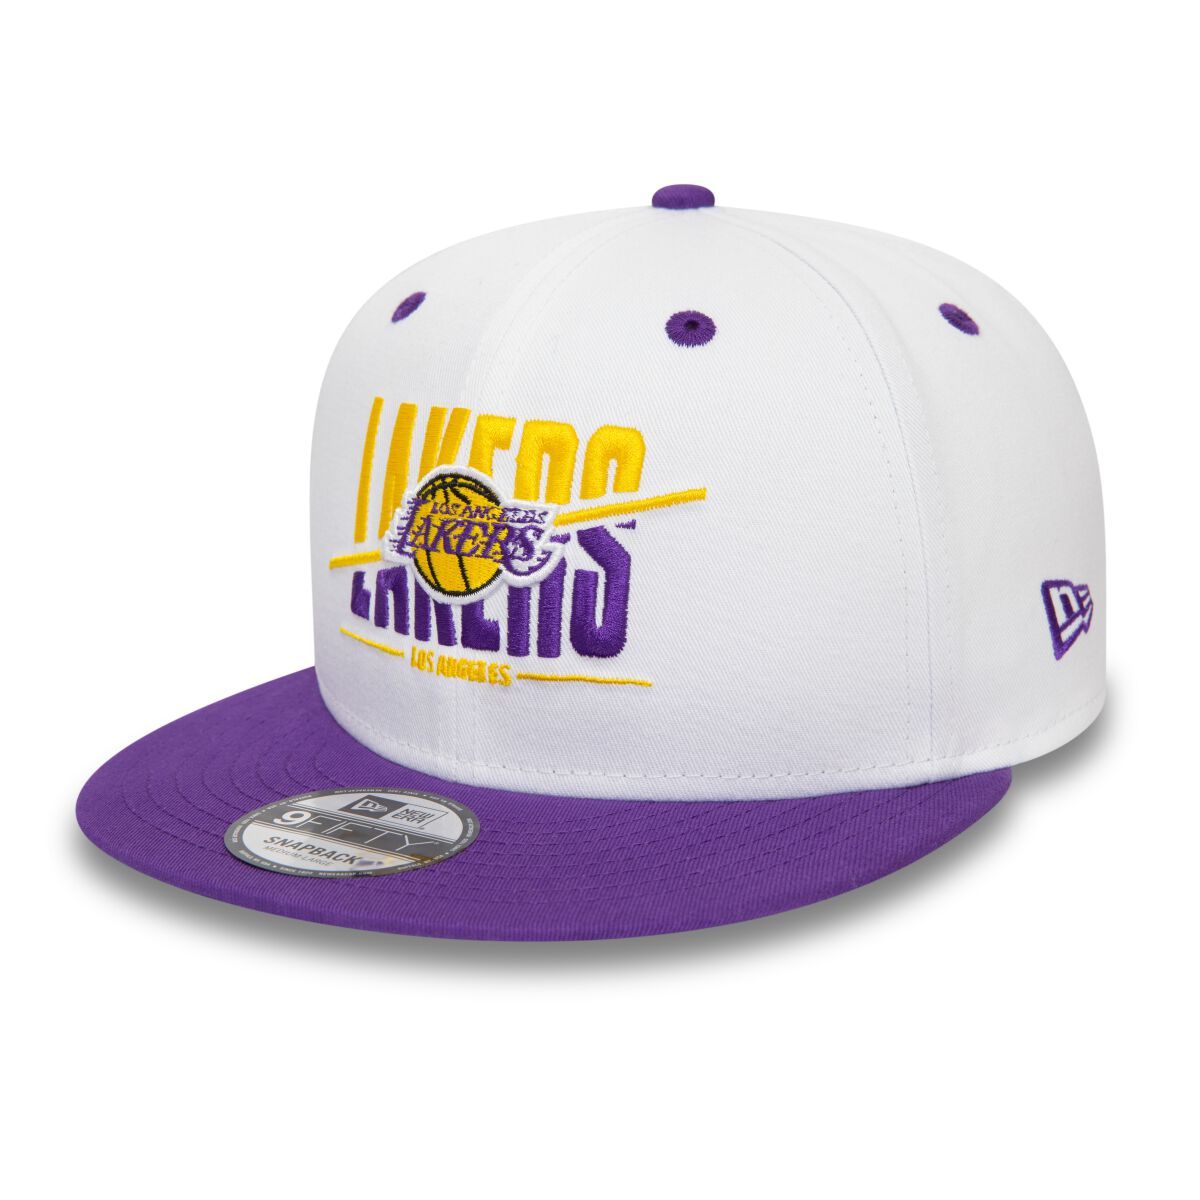 Cap New Era 950 Los Angeles Lakers White Purple